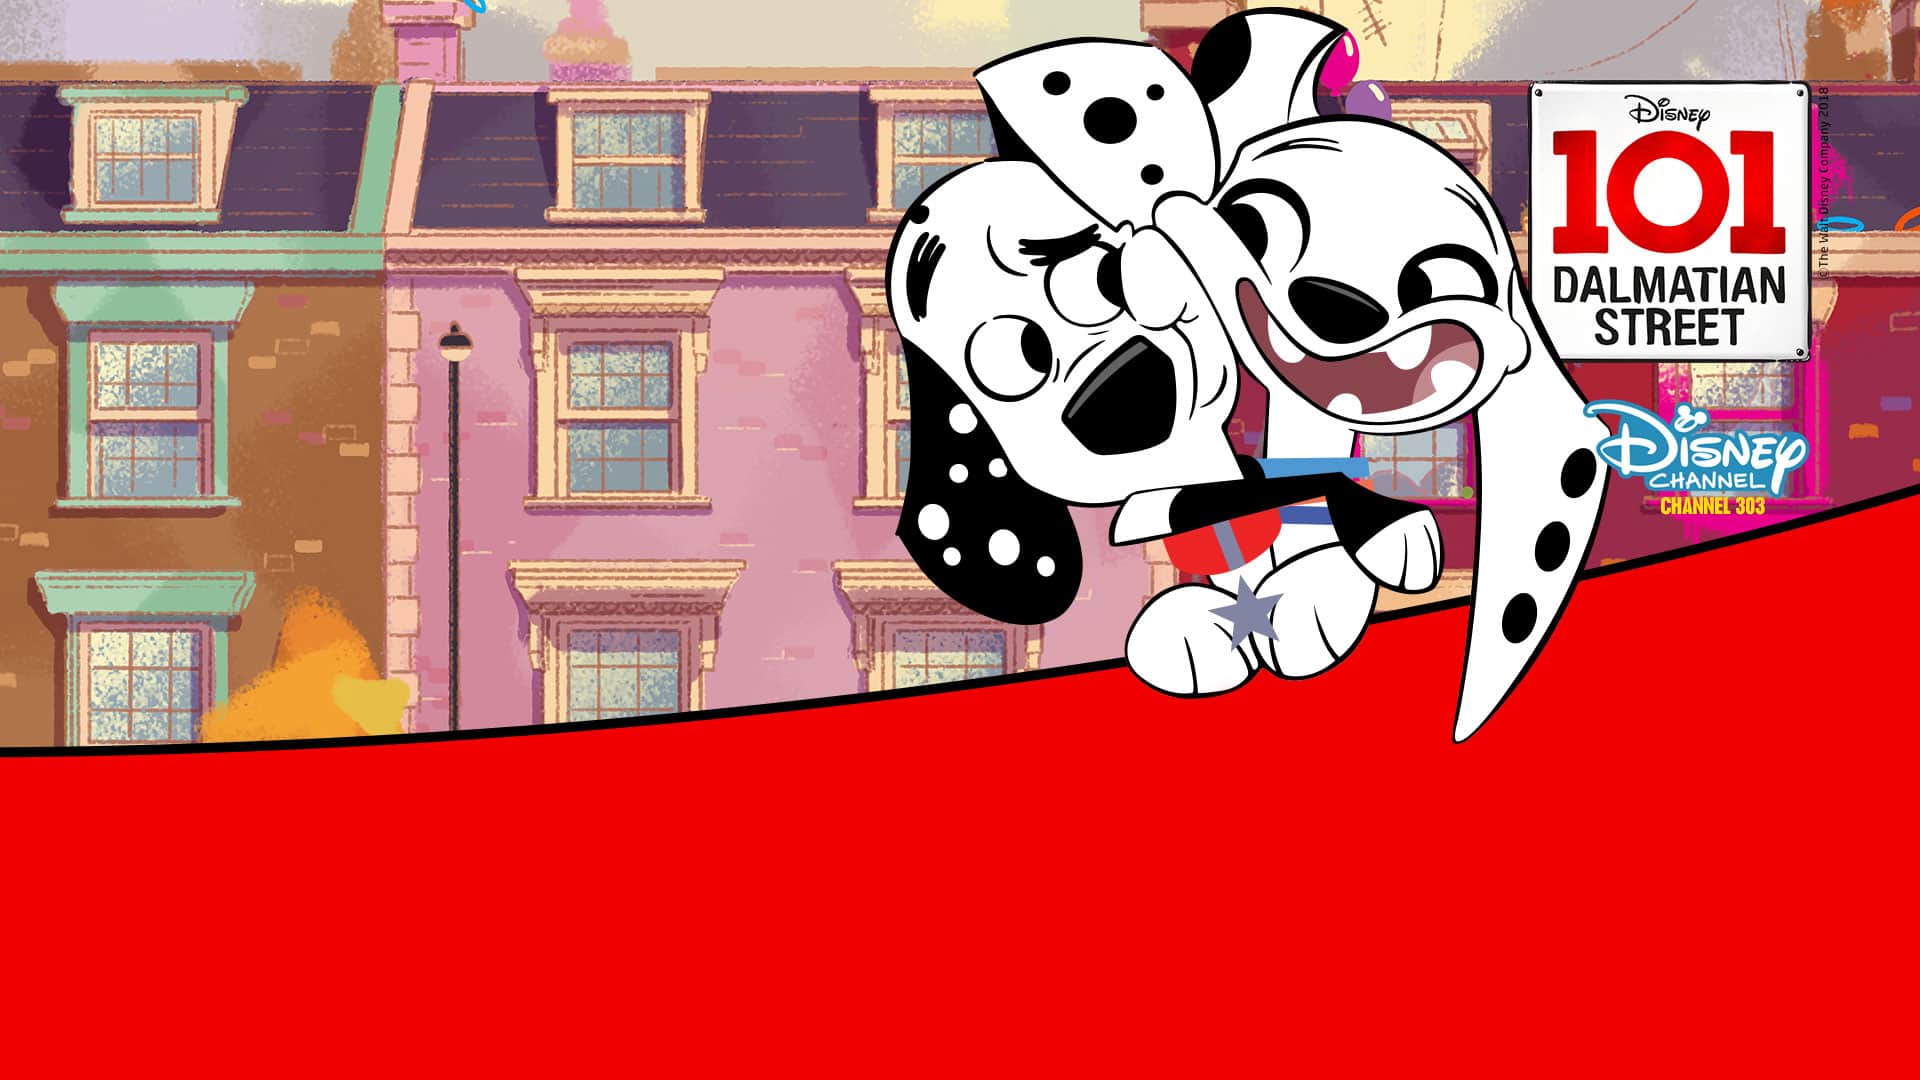 Brand new Disney Channel Animation 101 Dalmatian Street with DStv